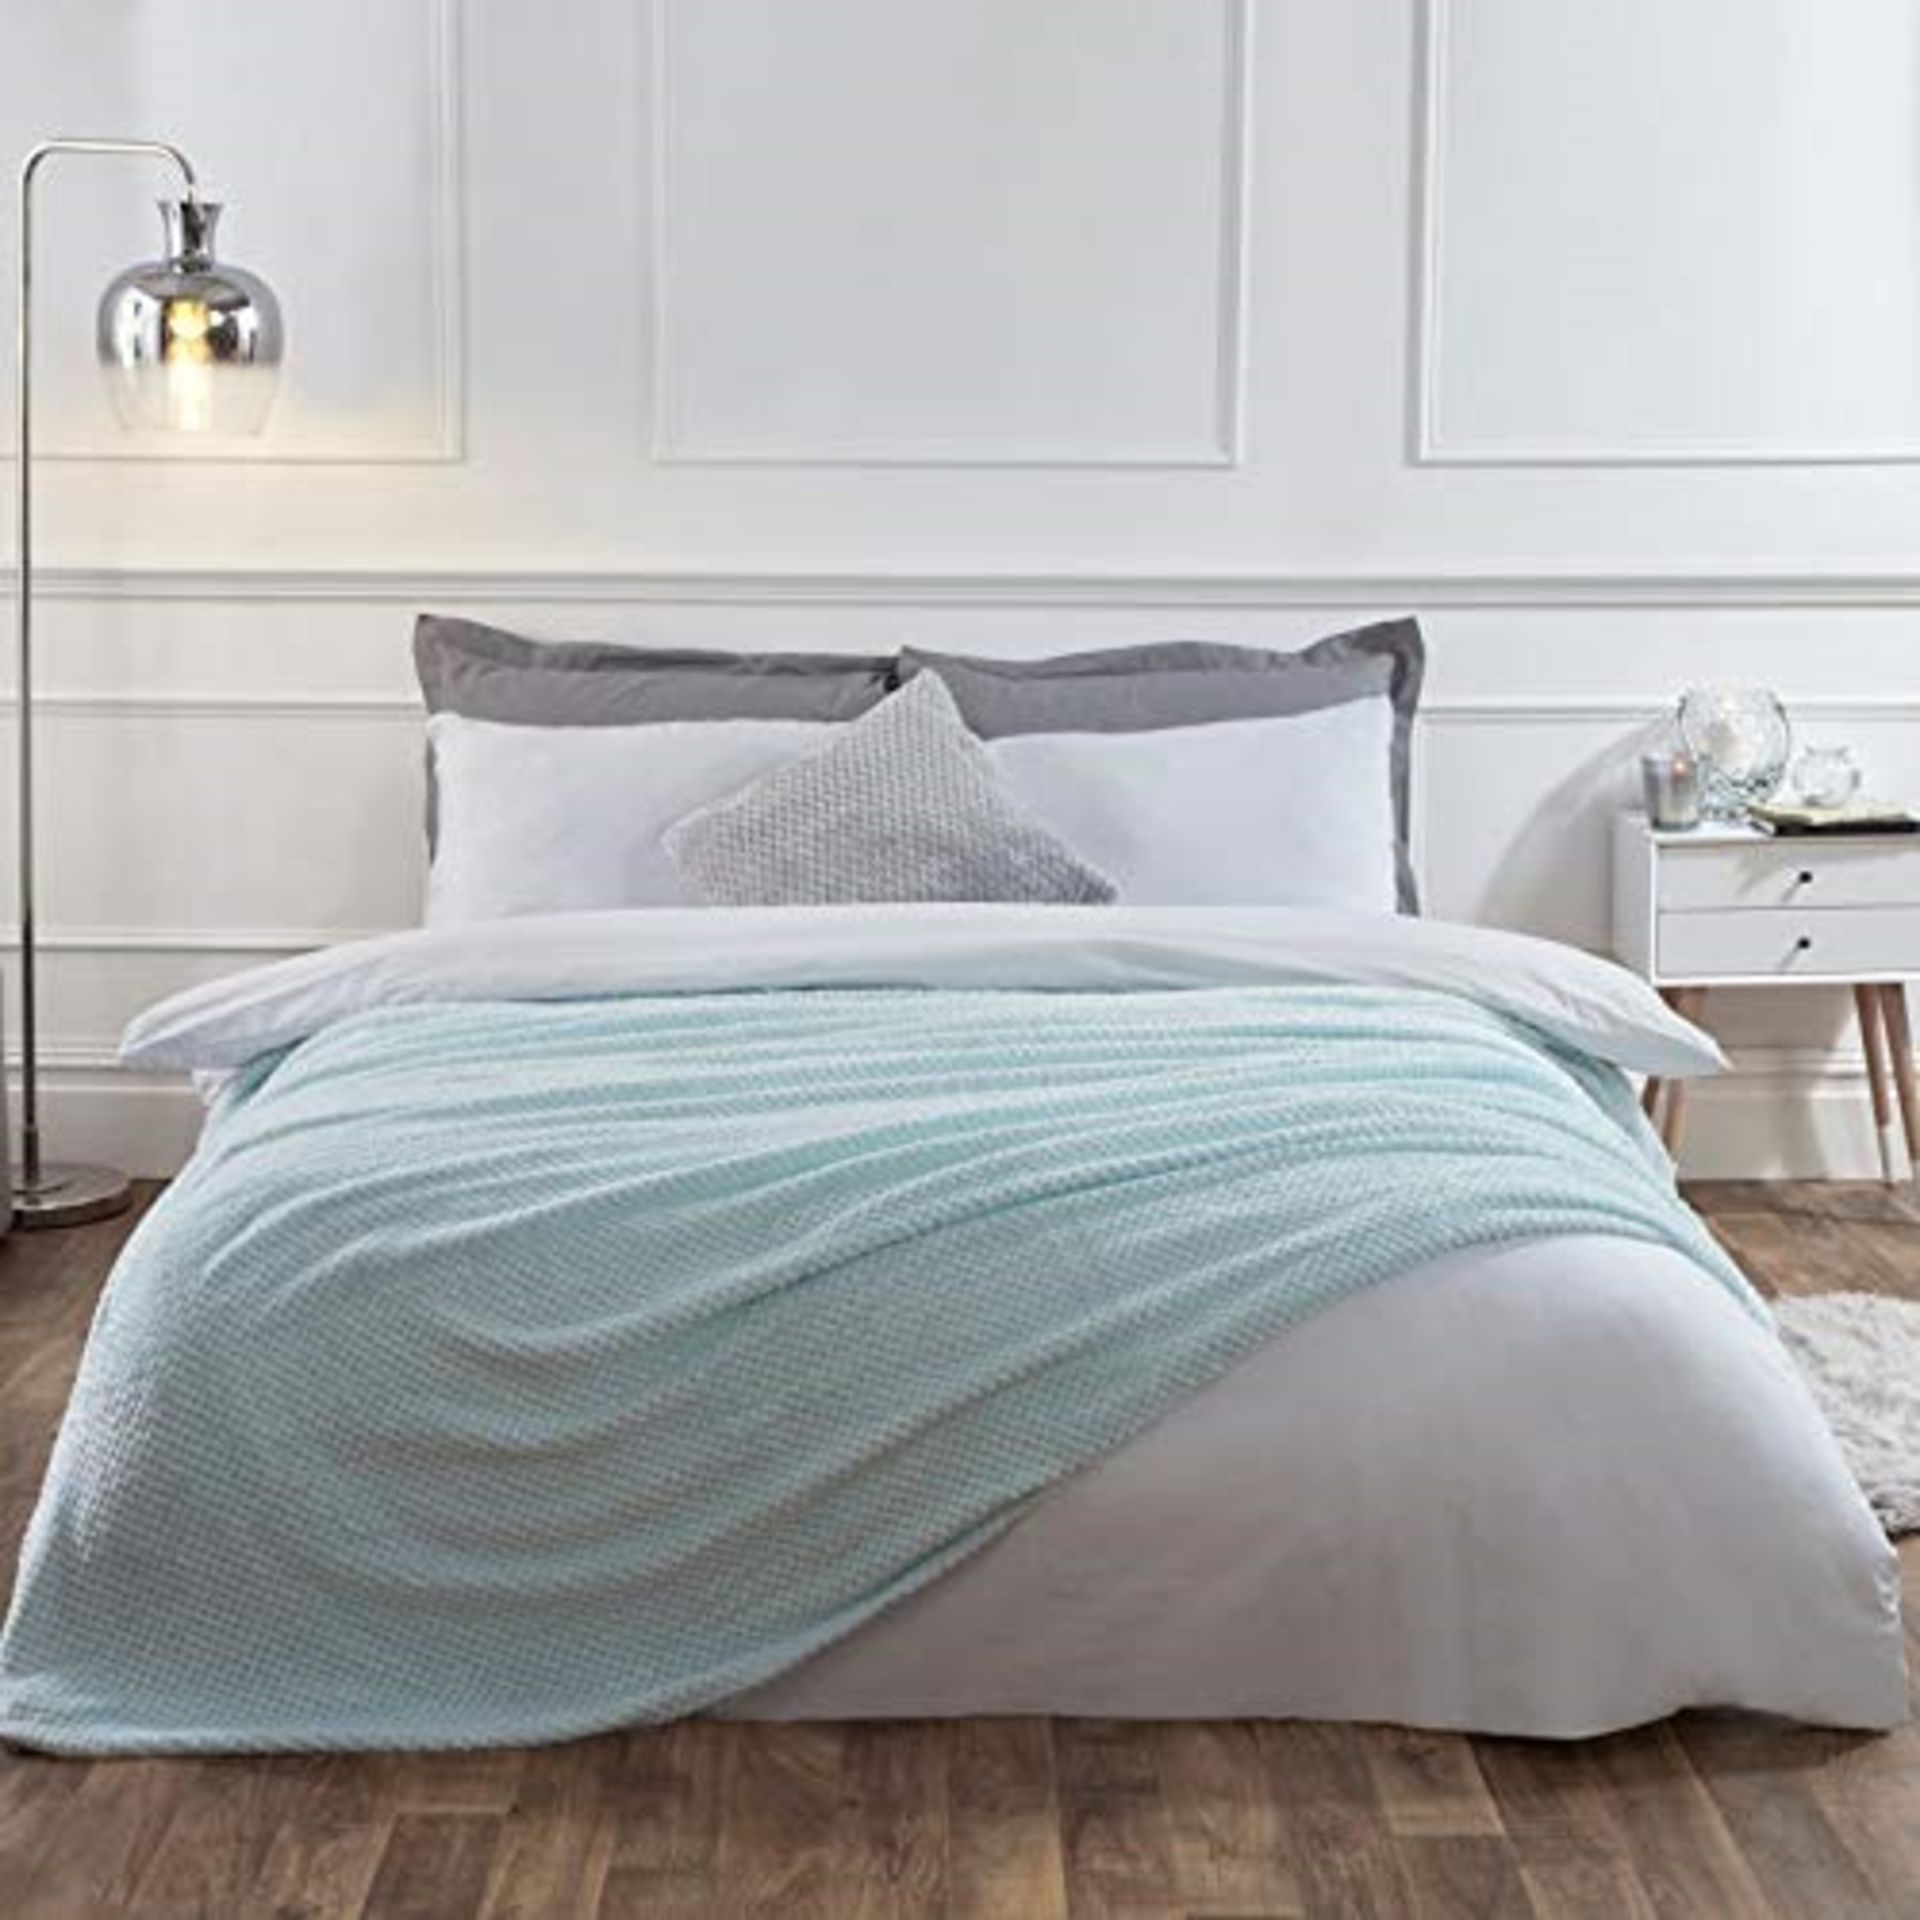 Dreamscene Luxury Waffle Soft Mink Warm Throw Over Sofa Bed Blanket 125 x 150 Duck Egg